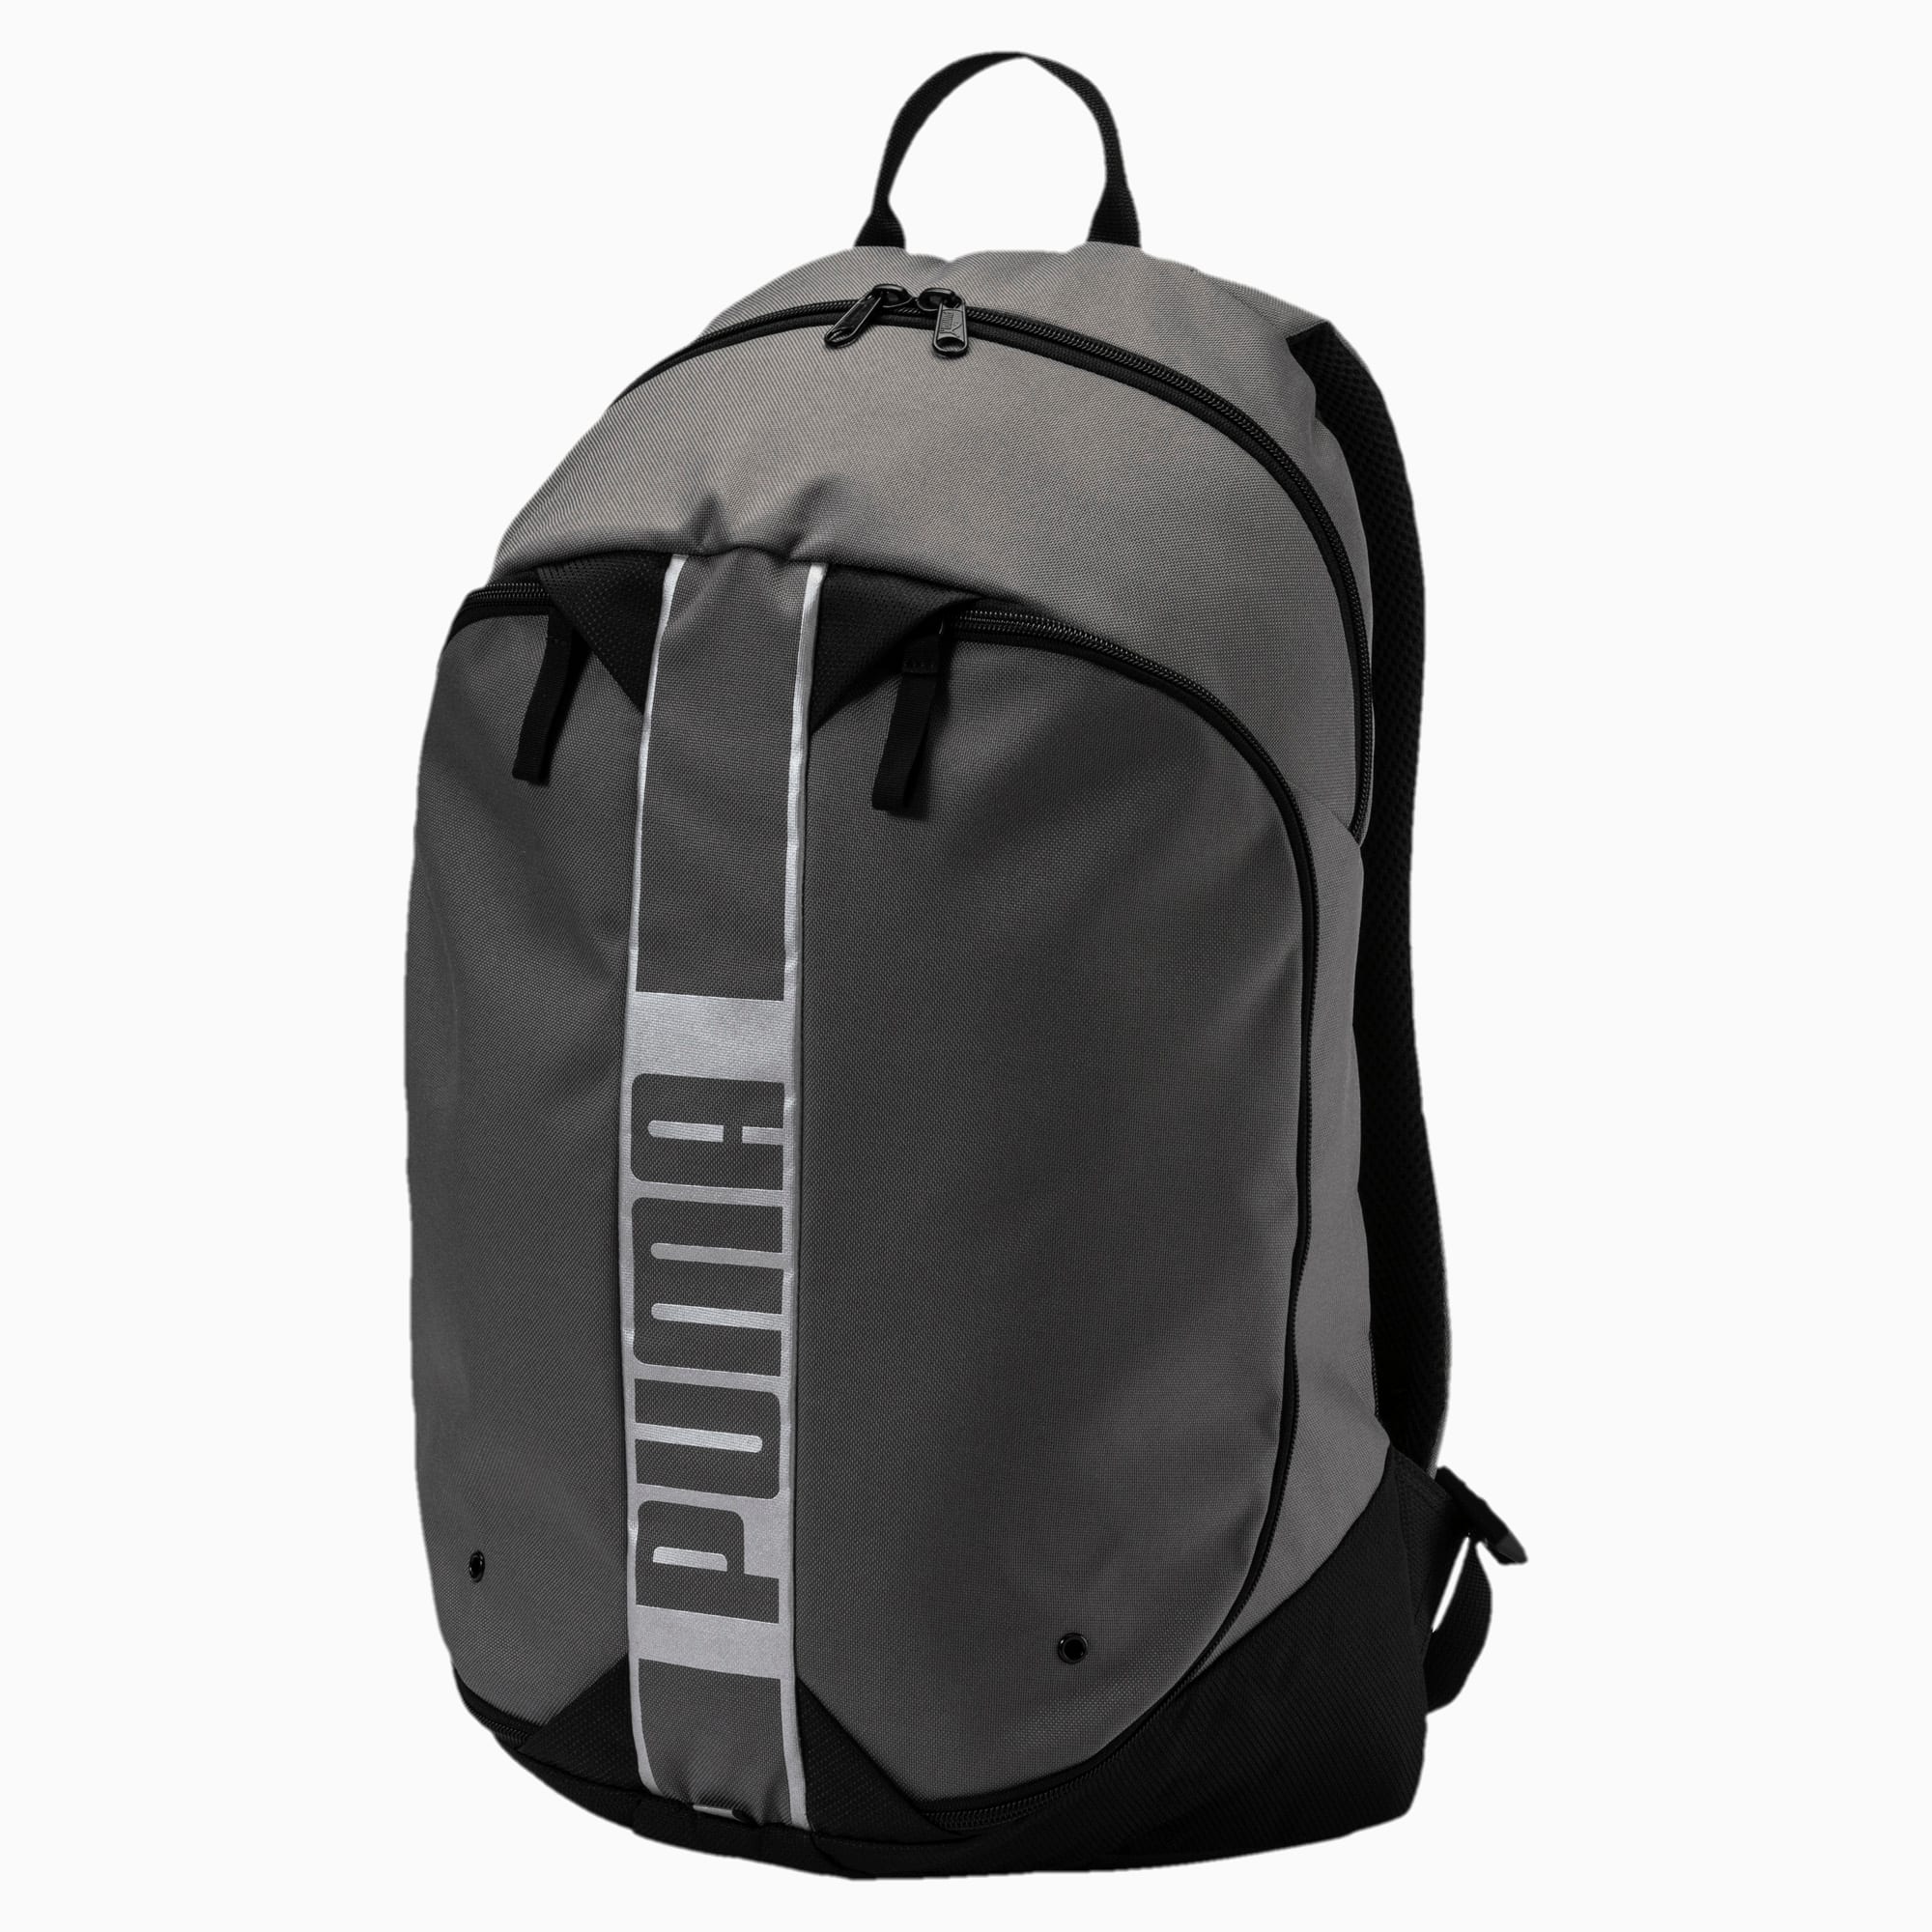 Deck Backpack | PUMA Shop All Puma | PUMA